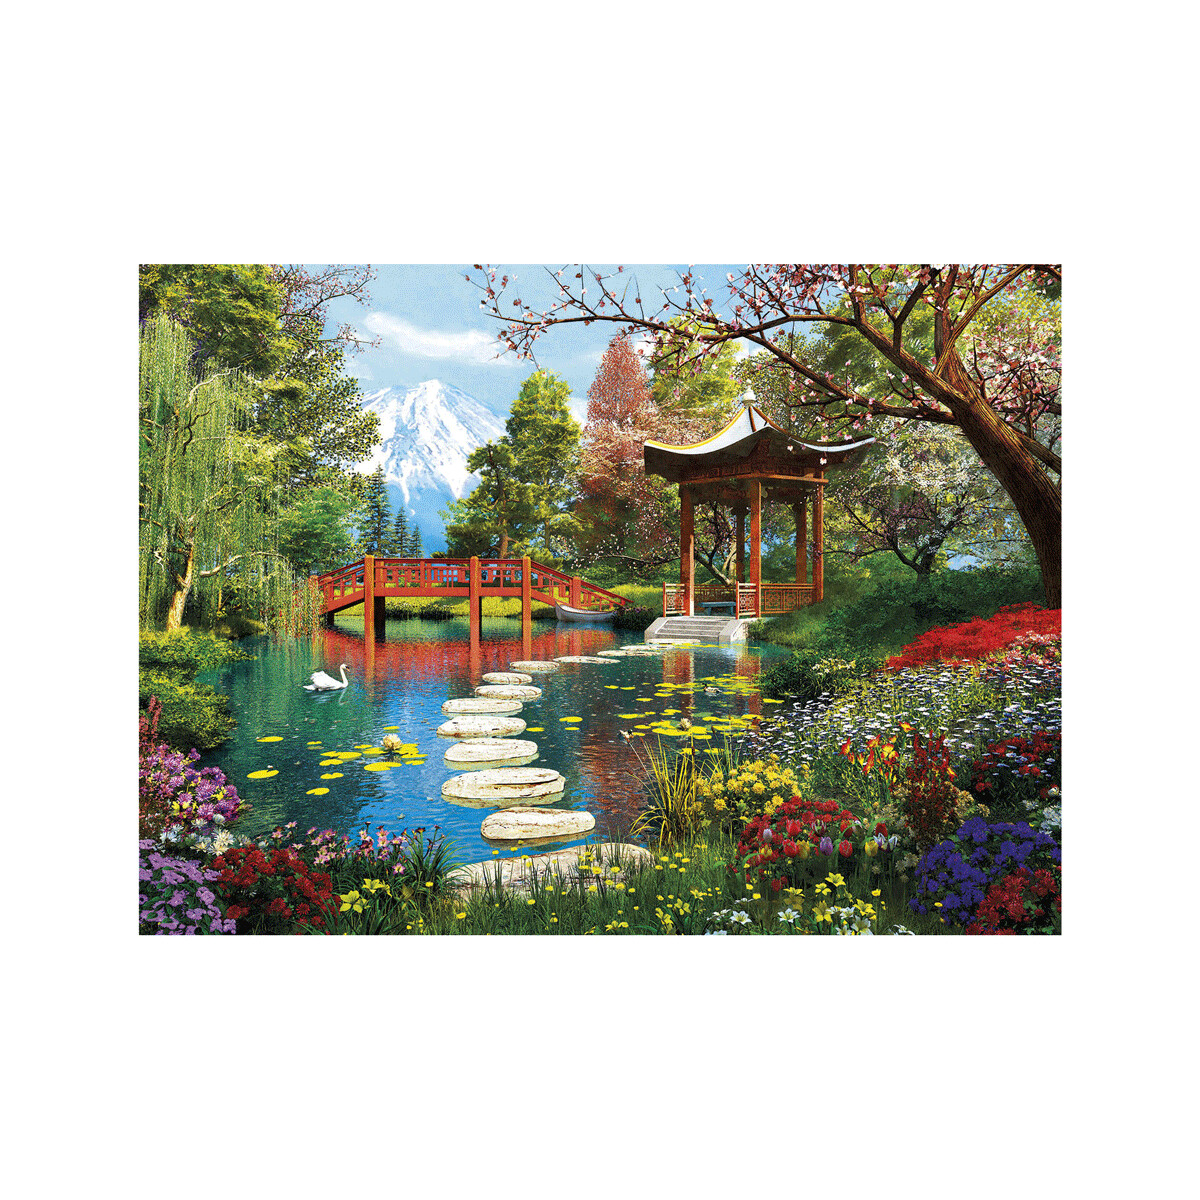 Clementoni - 39513 - puzzle 1000 hqc gardens fuji 70 x 50 cm - CLEMENTONI